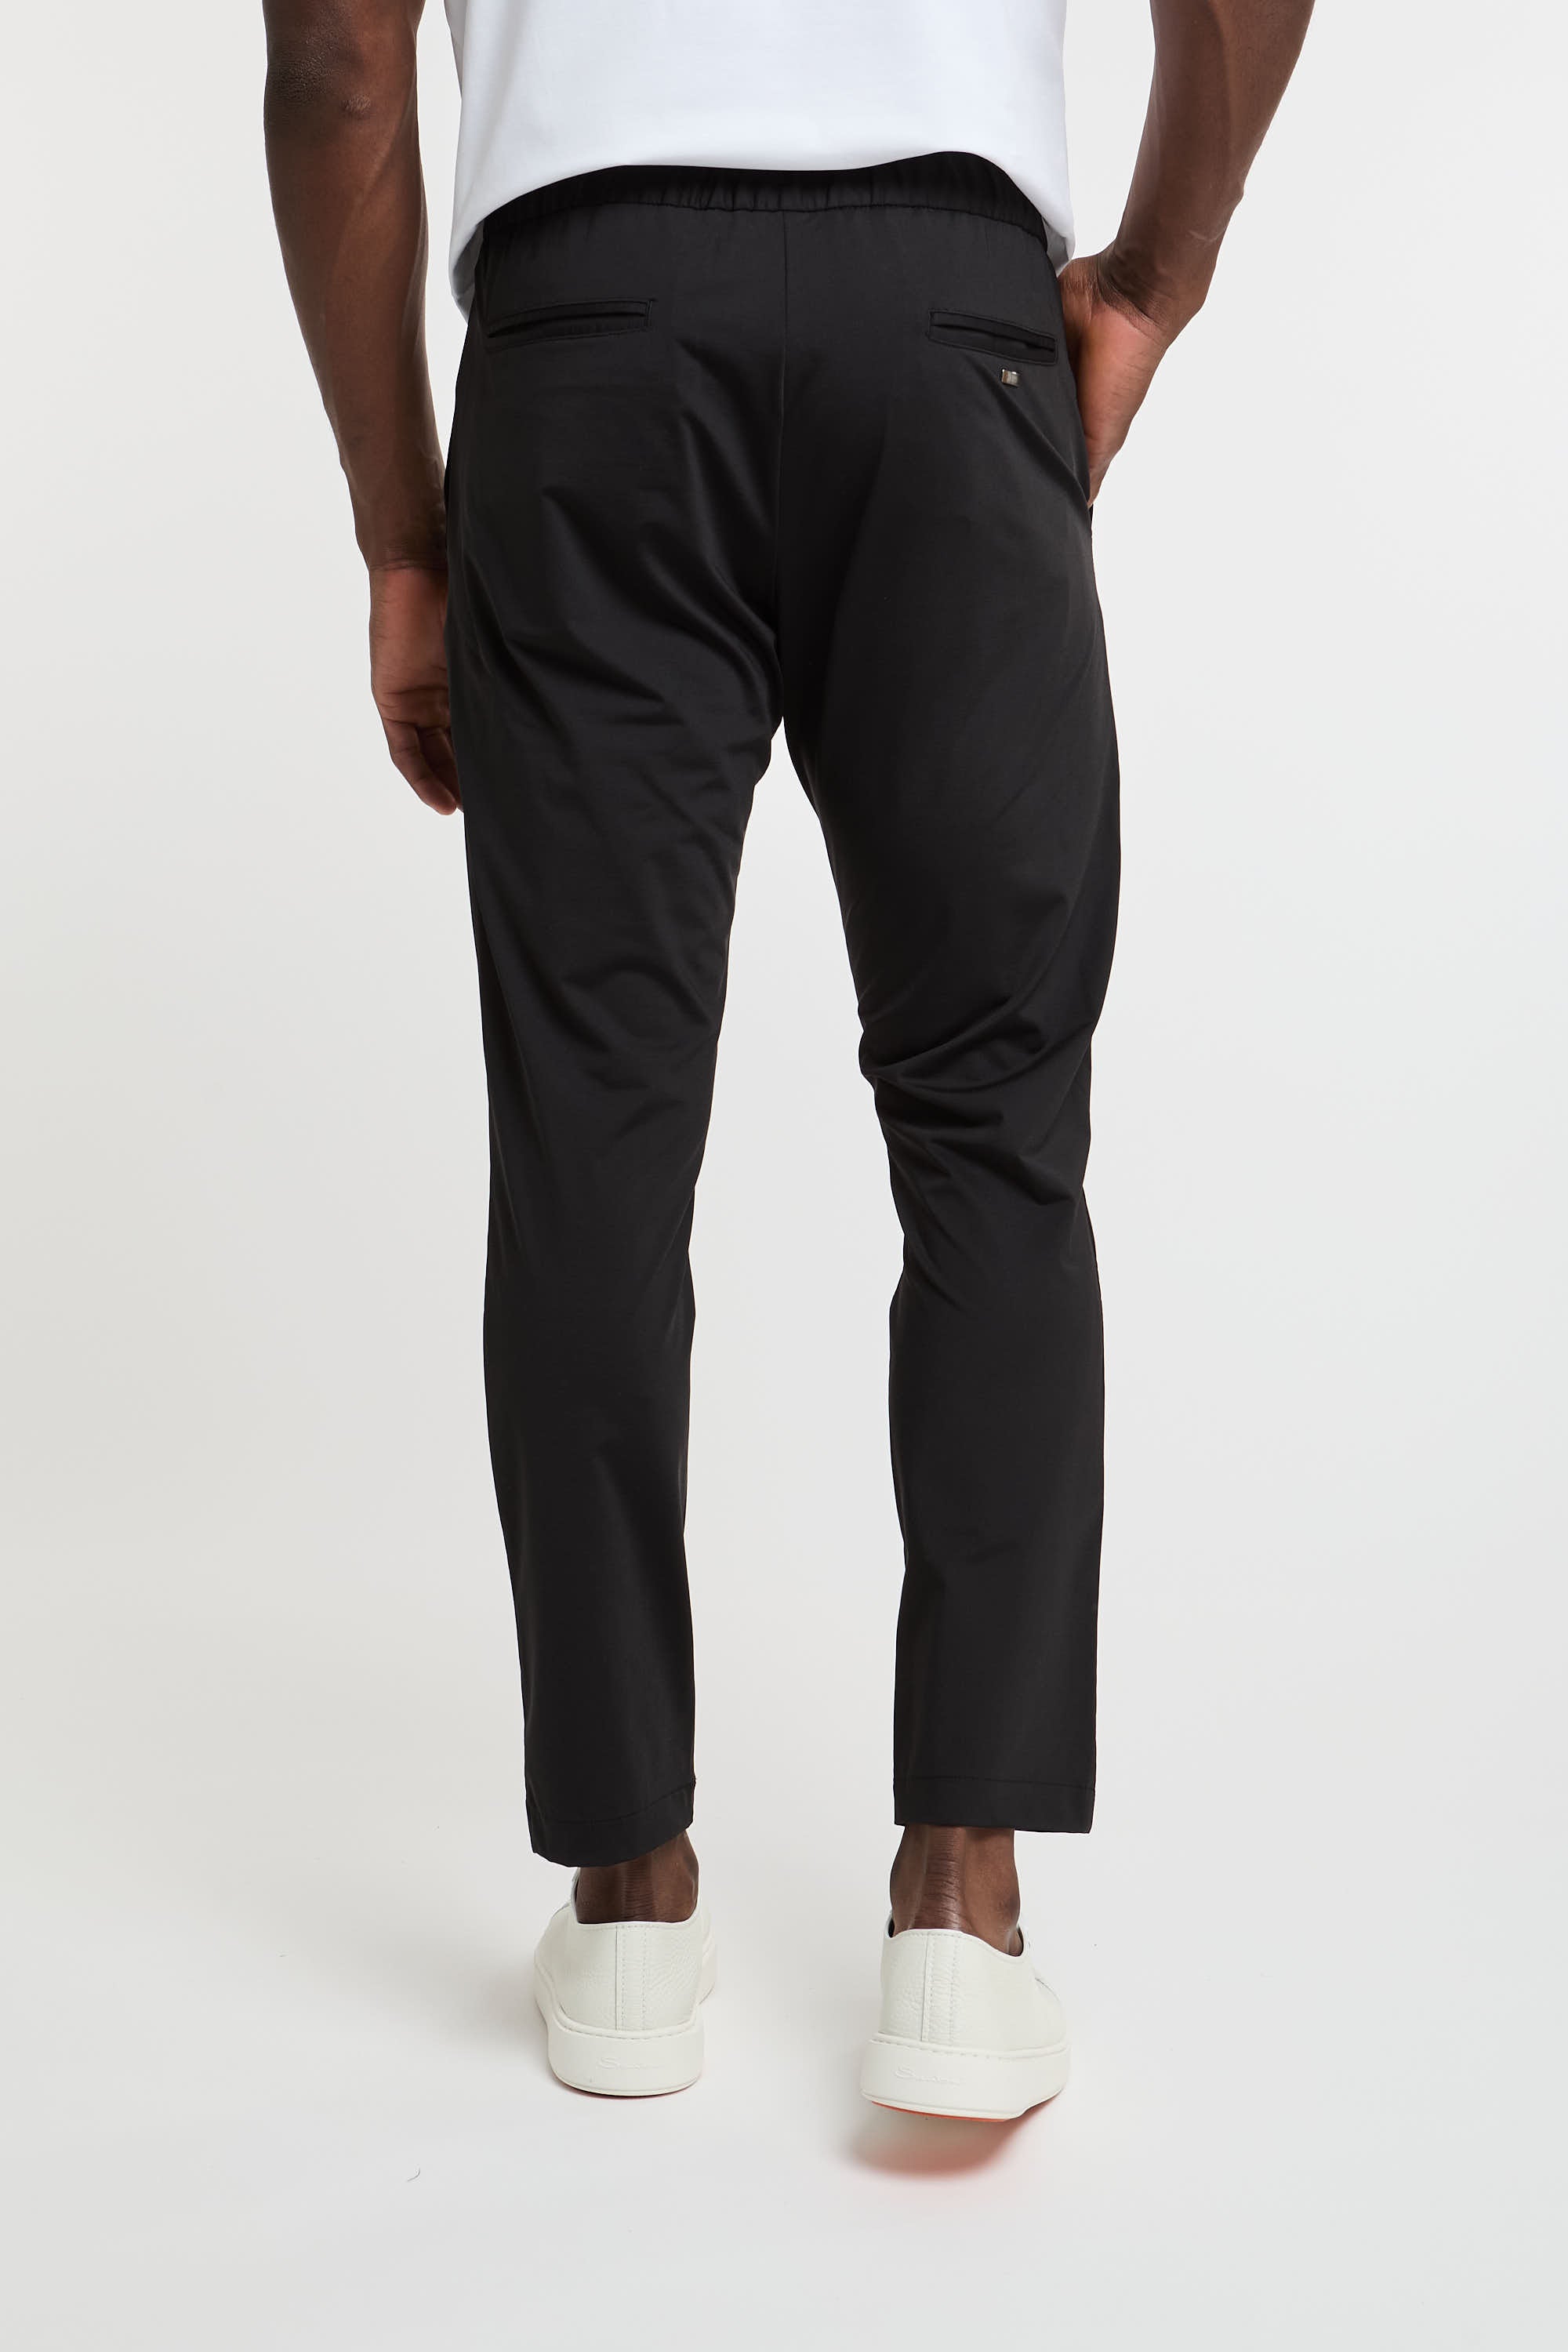 Herno Black Nylon Jersey Pants-5